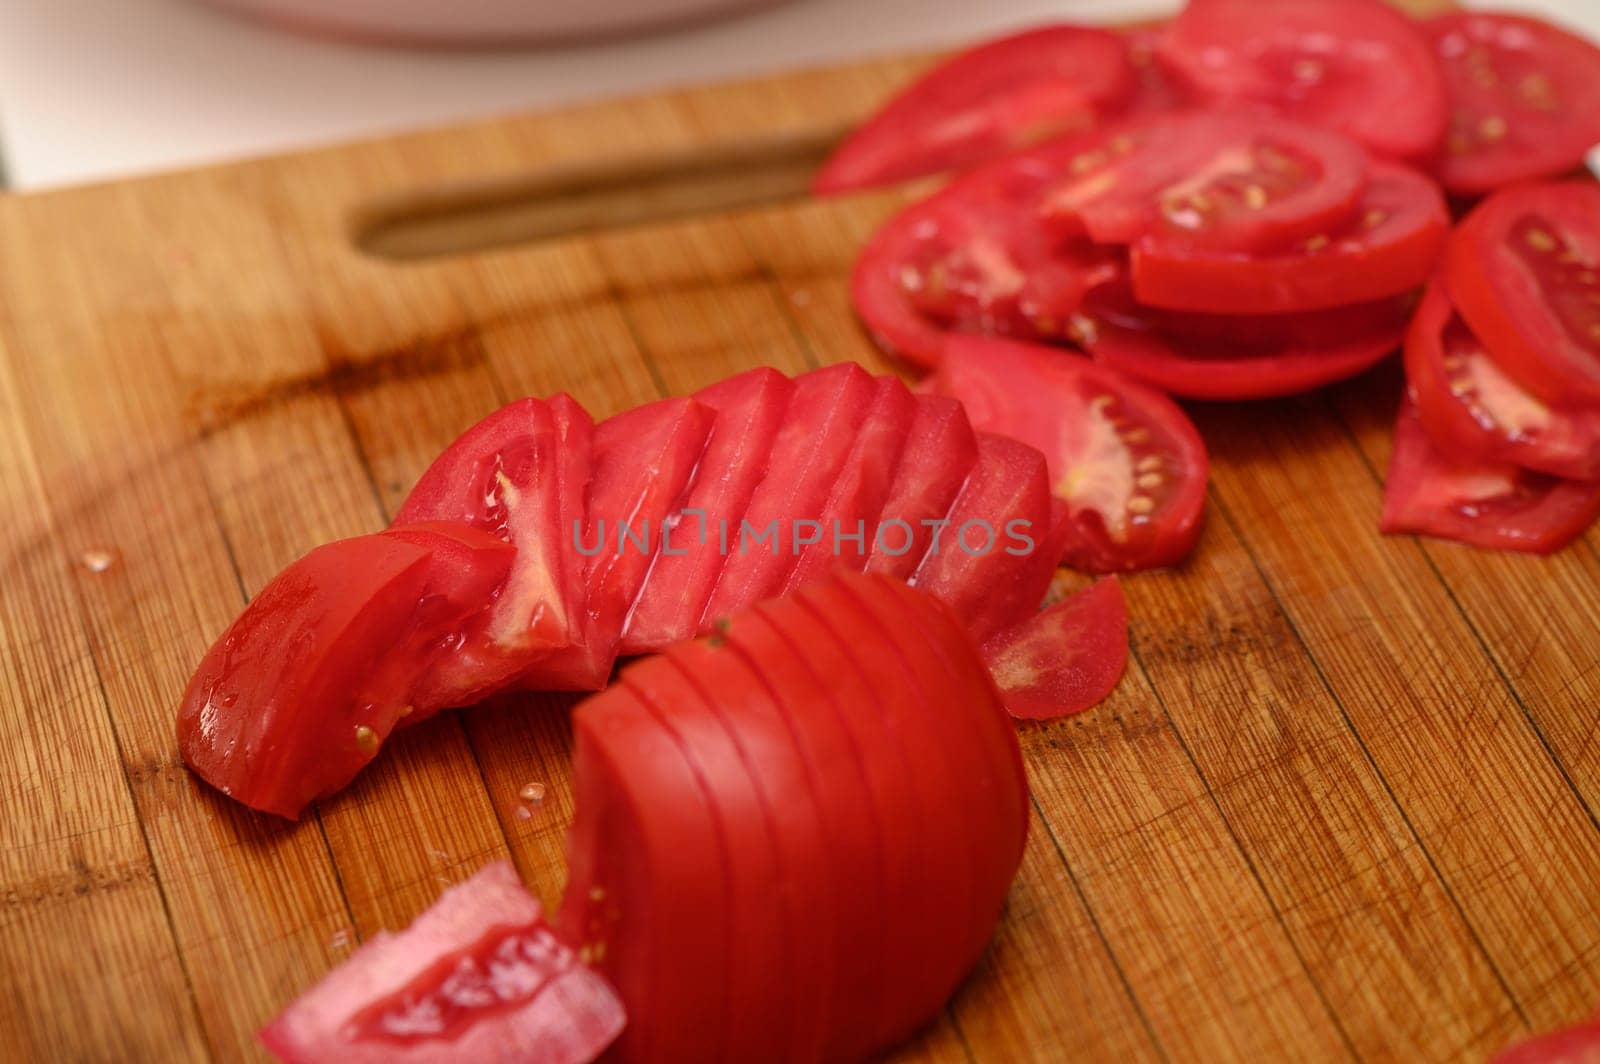 woman cutting tomato on kitchen board 7